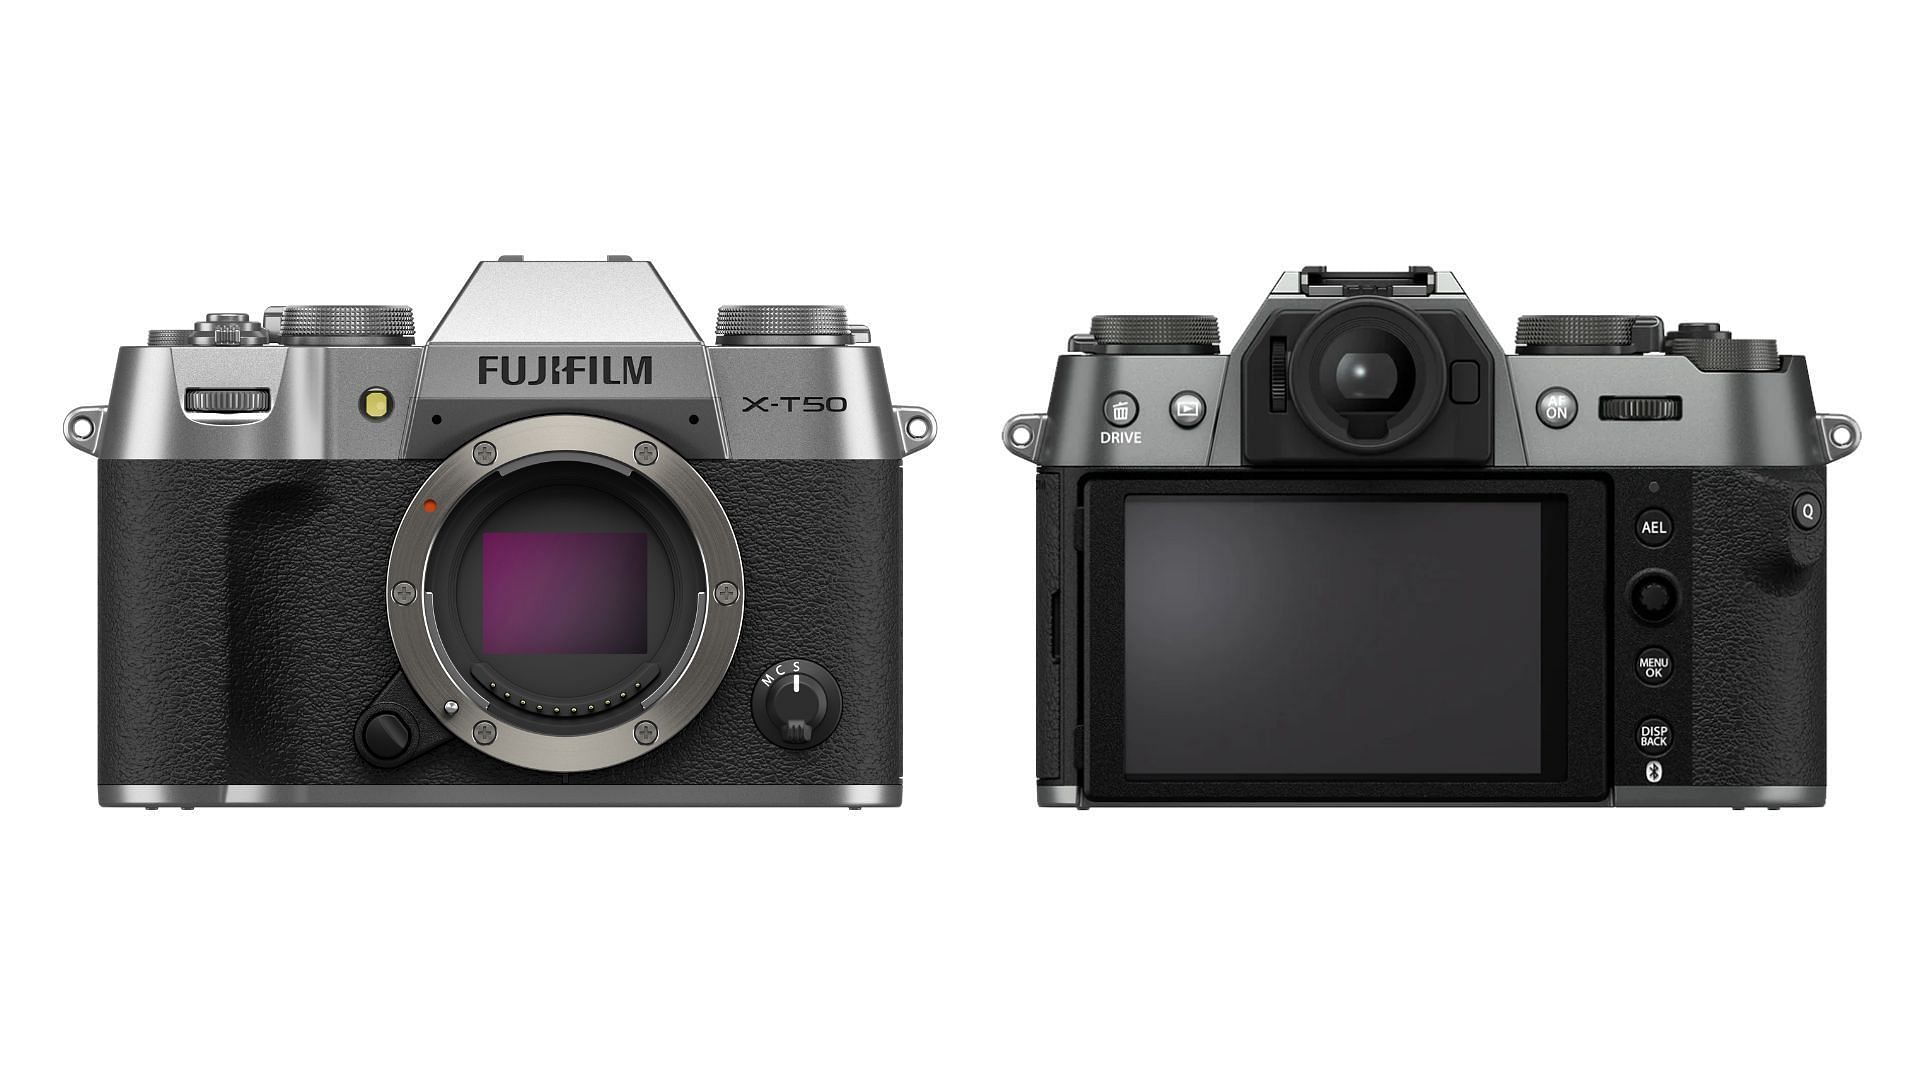 Fujifilm X-T50 - best affordable mirrorless camera (Image via Fujifilm)